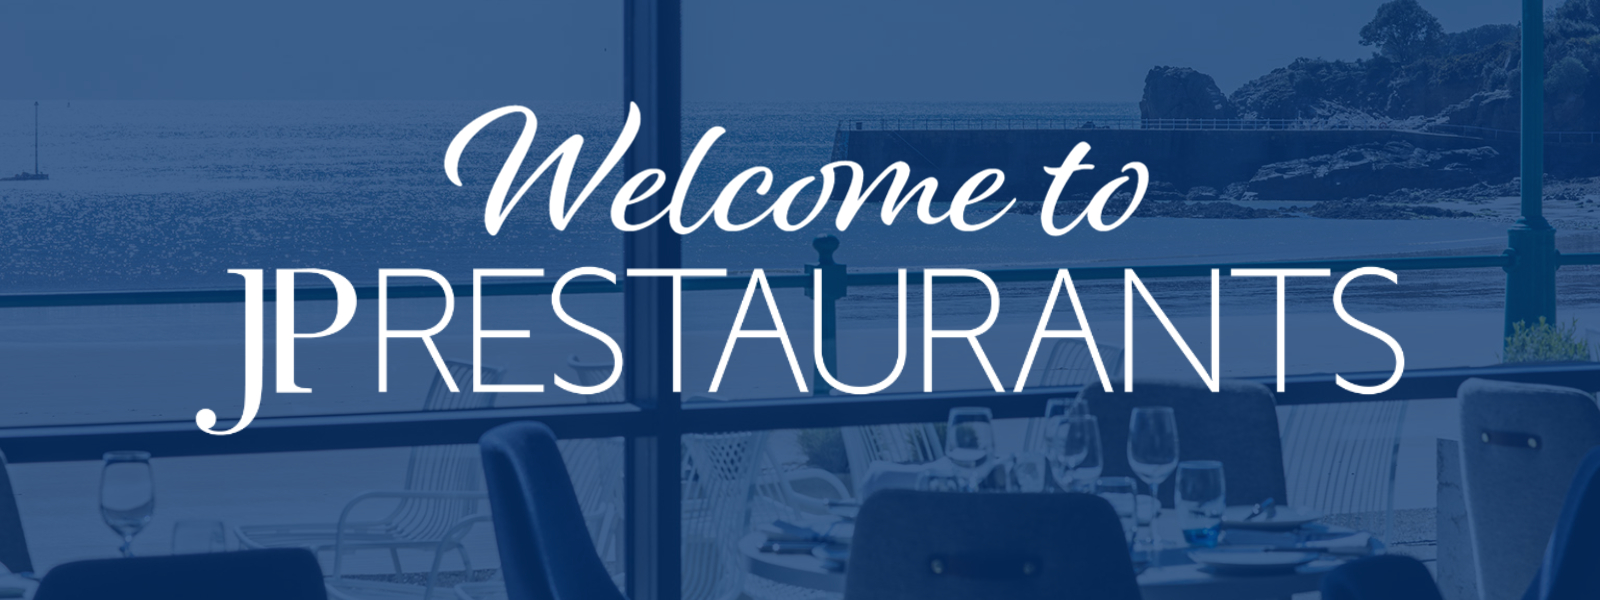 Welcome to JPRestaurants Image with Restaurant Background